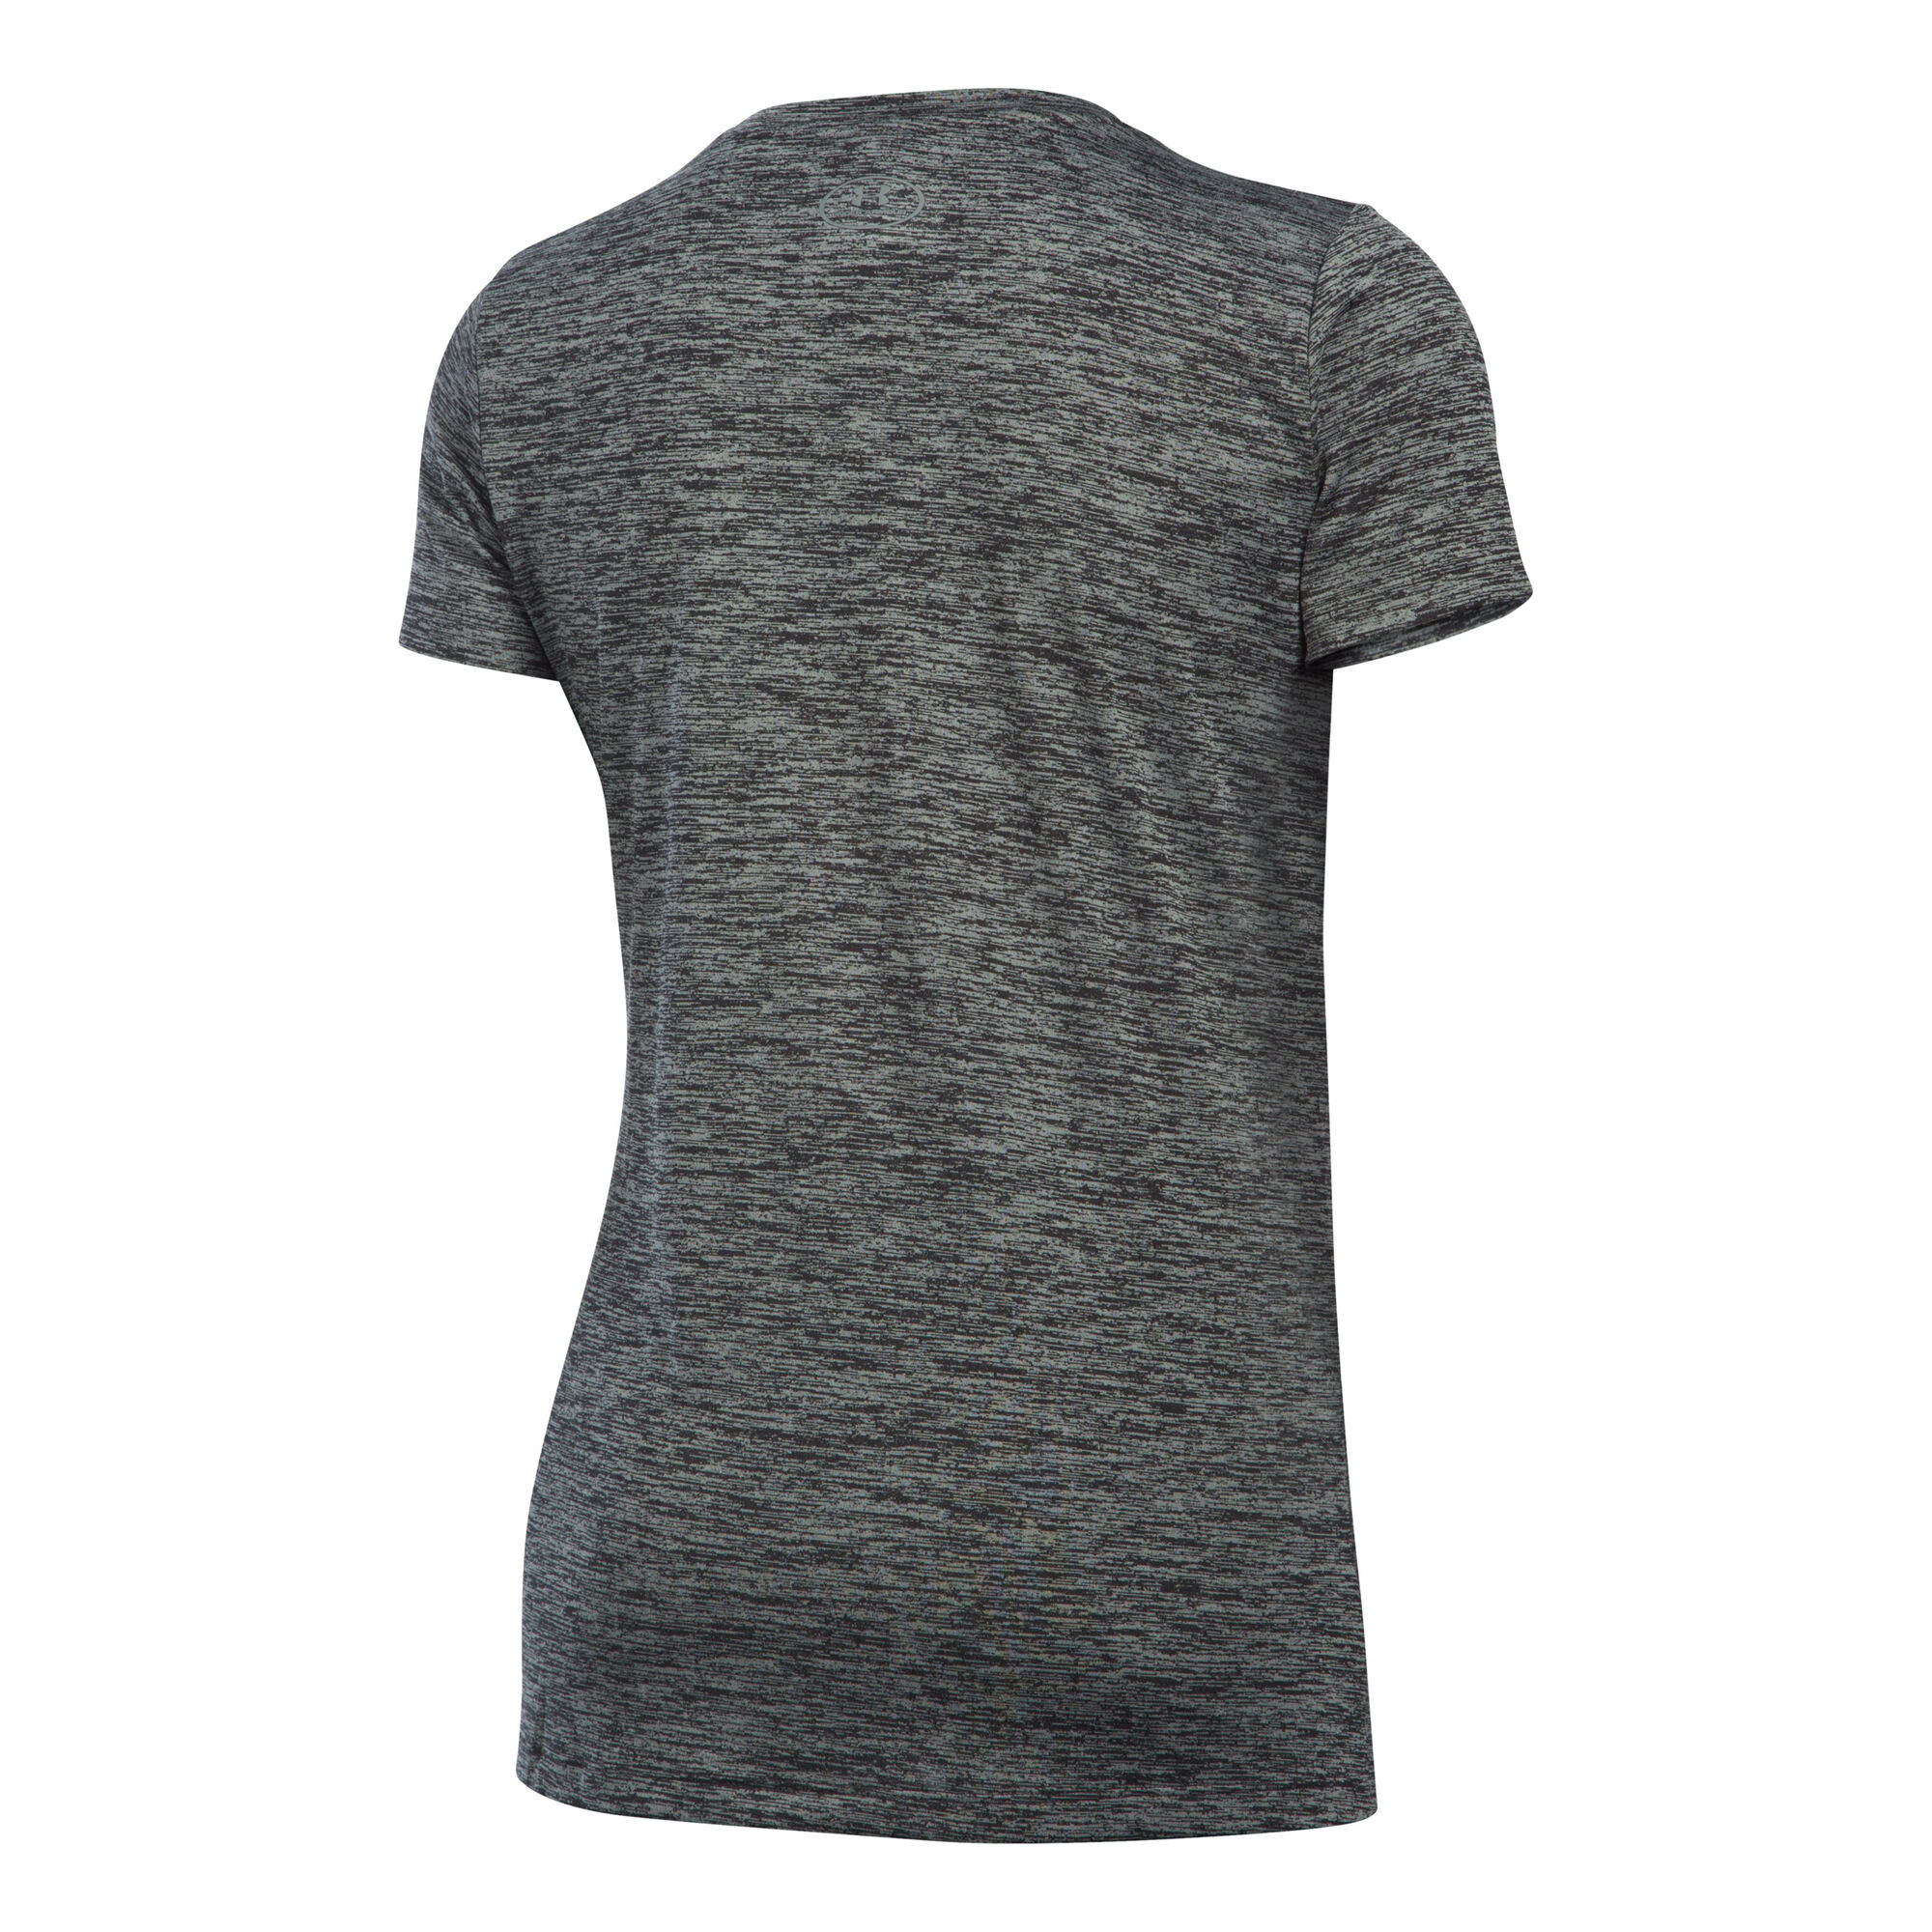 Buy Under Armour Tech Twist T-Shirt Women Grey online